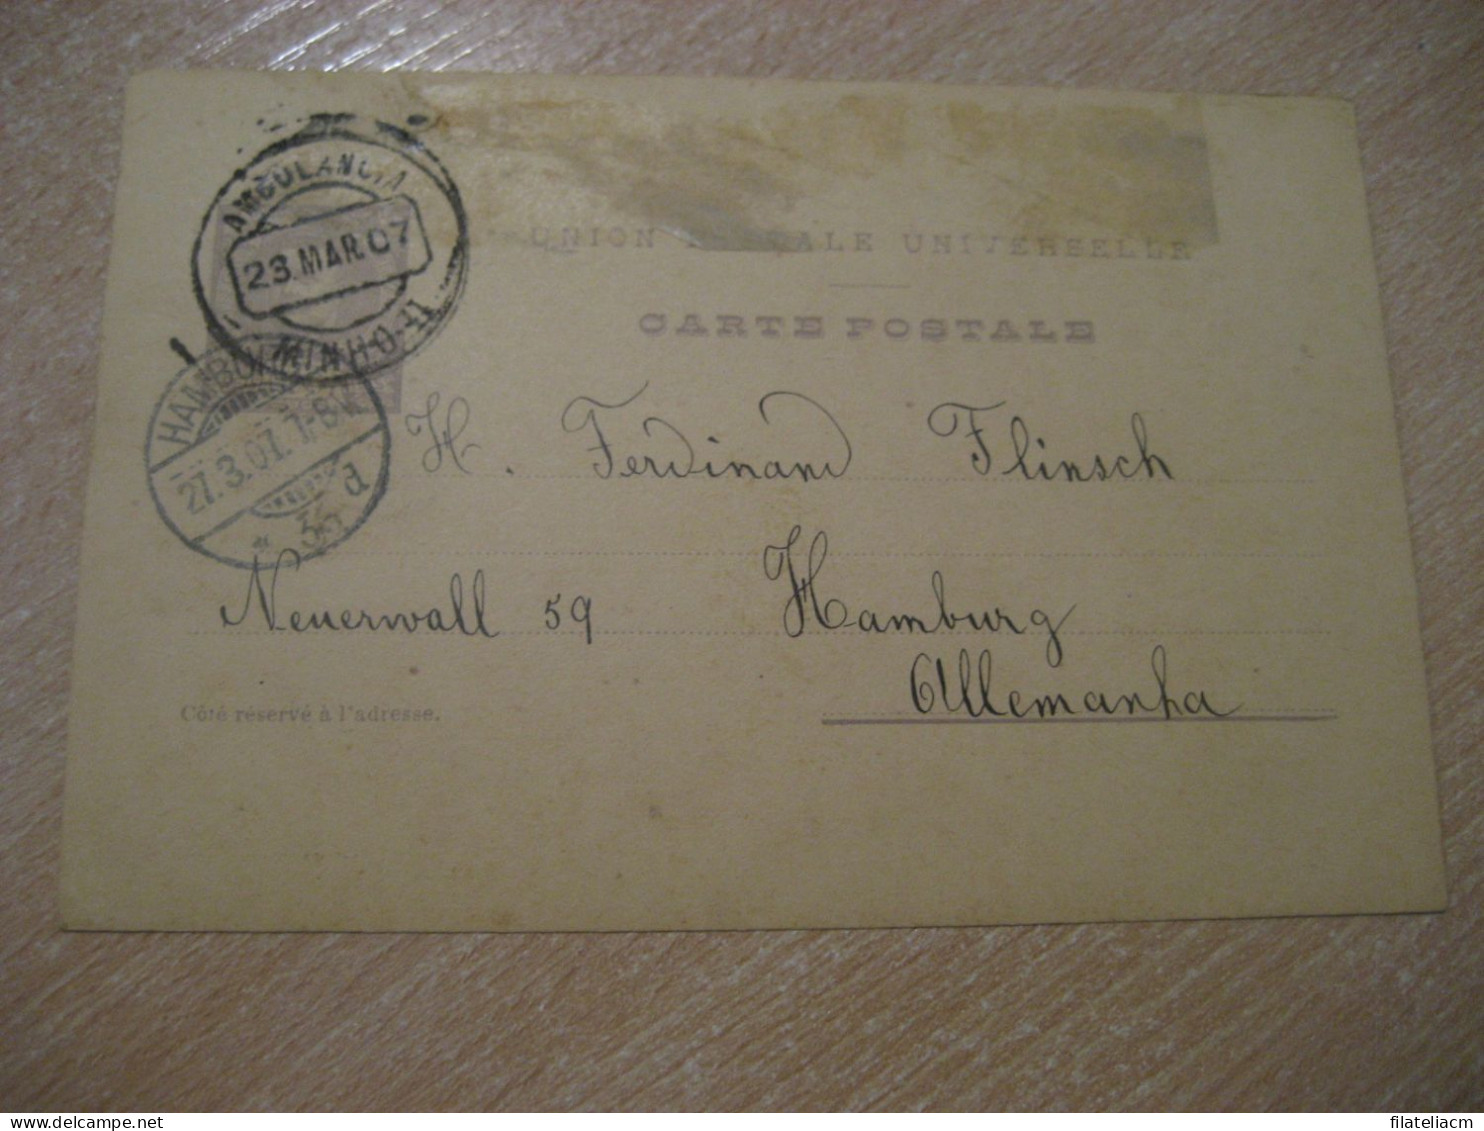 AMBULANCIA MINHO II Braga Porto 1907 To Hamburg Germany Cancel UPU Faults Carte Postale Postal Stationery Card PORTUGAL - Covers & Documents